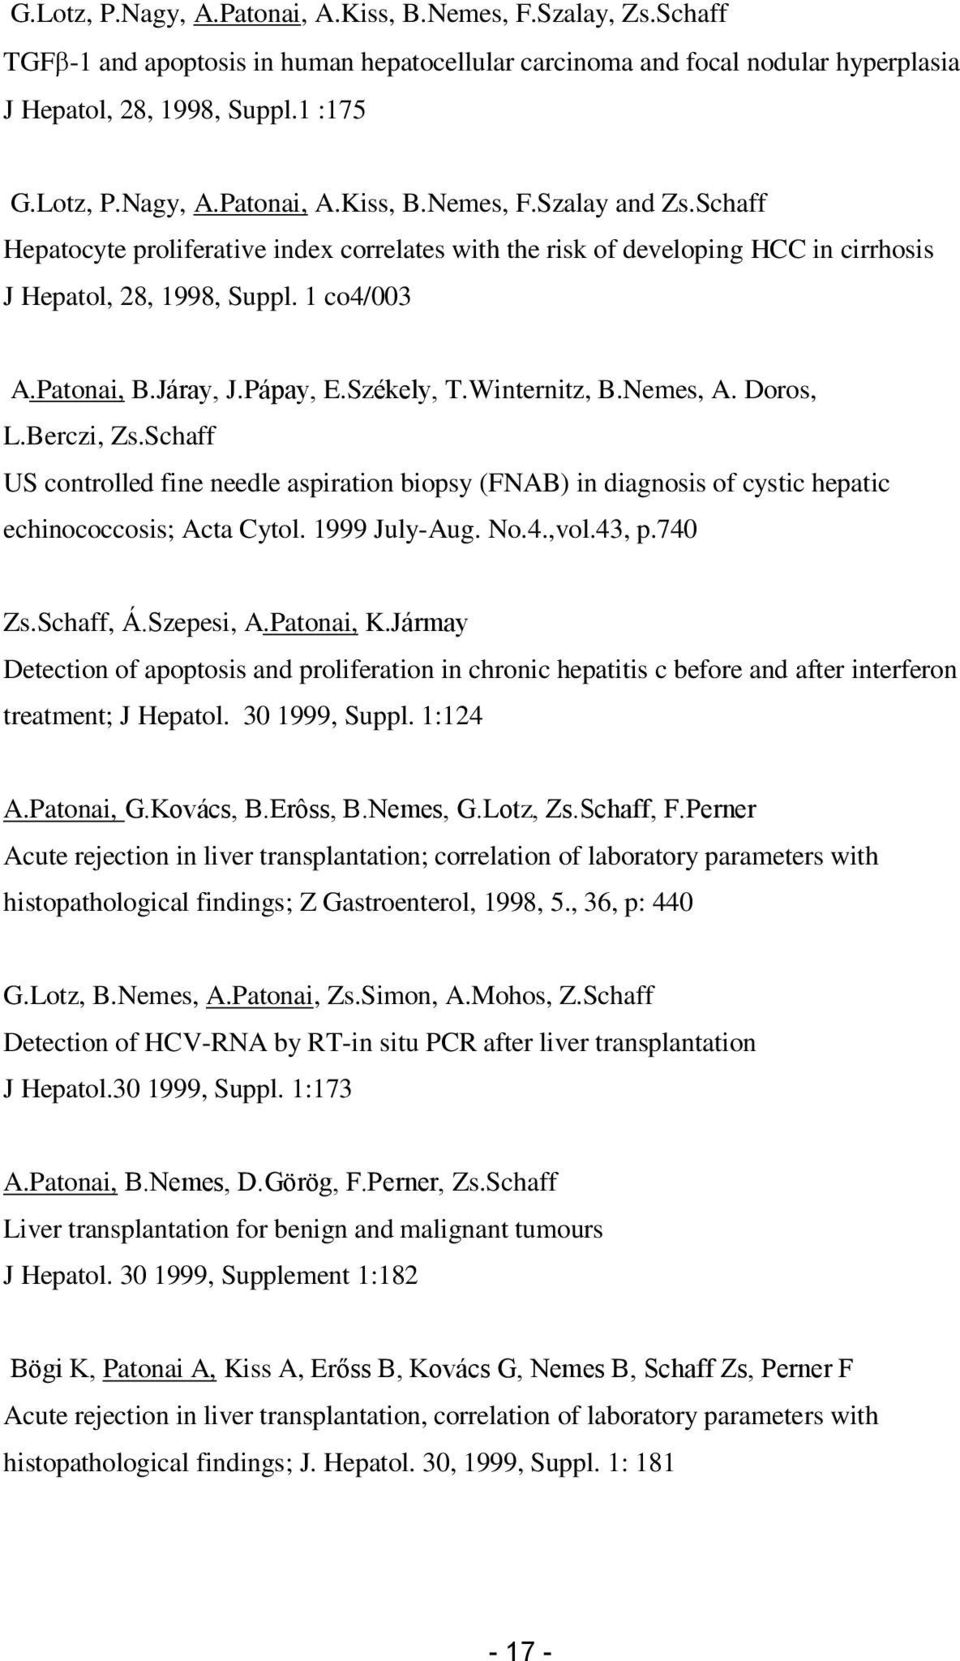 Doros, L.Berczi, Zs.Schaff US controlled fine needle aspiration biopsy (FNAB) in diagnosis of cystic hepatic echinococcosis; Acta Cytol. 1999 July-Aug. No.4.,vol.43, p.740 Zs.Schaff, Á.Szepesi, A.